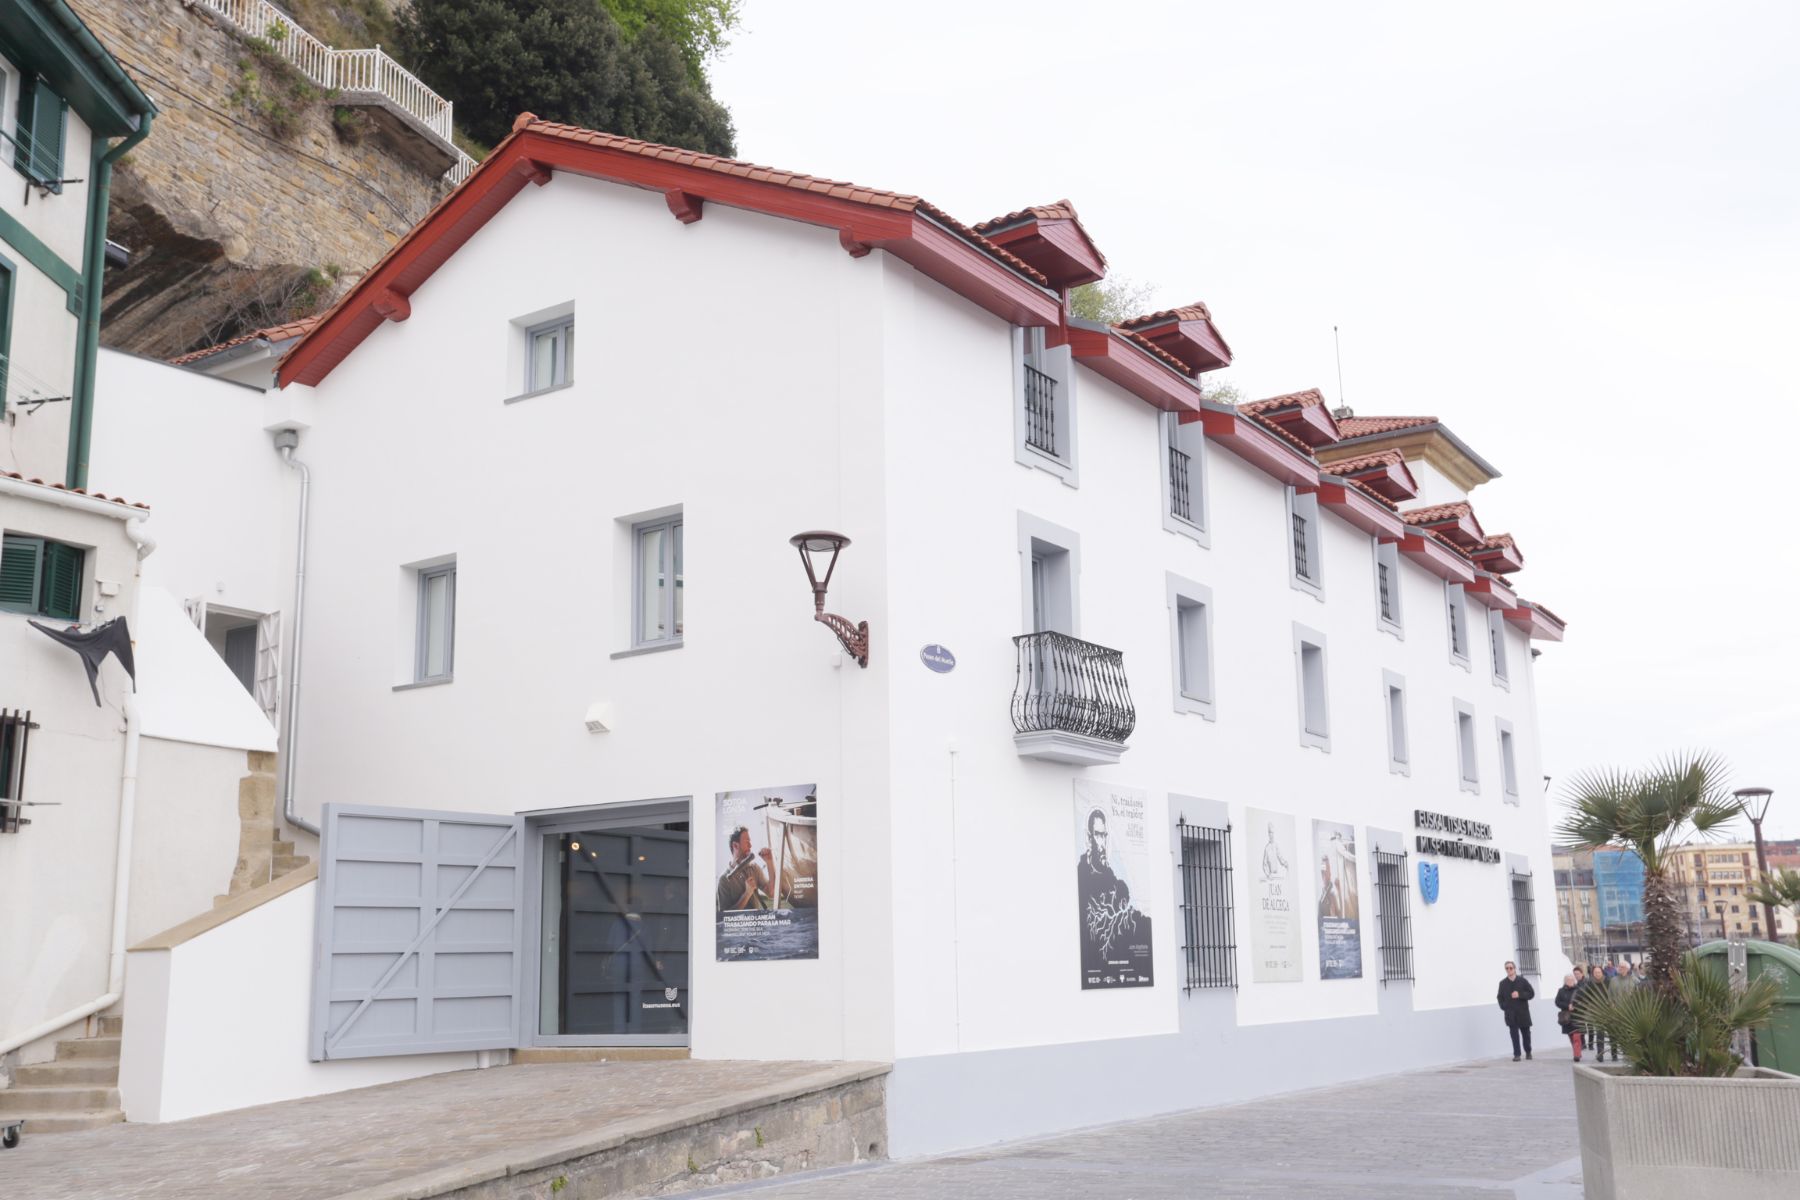 The Euskal Itsas Museoa among the 20 best European maritime museums